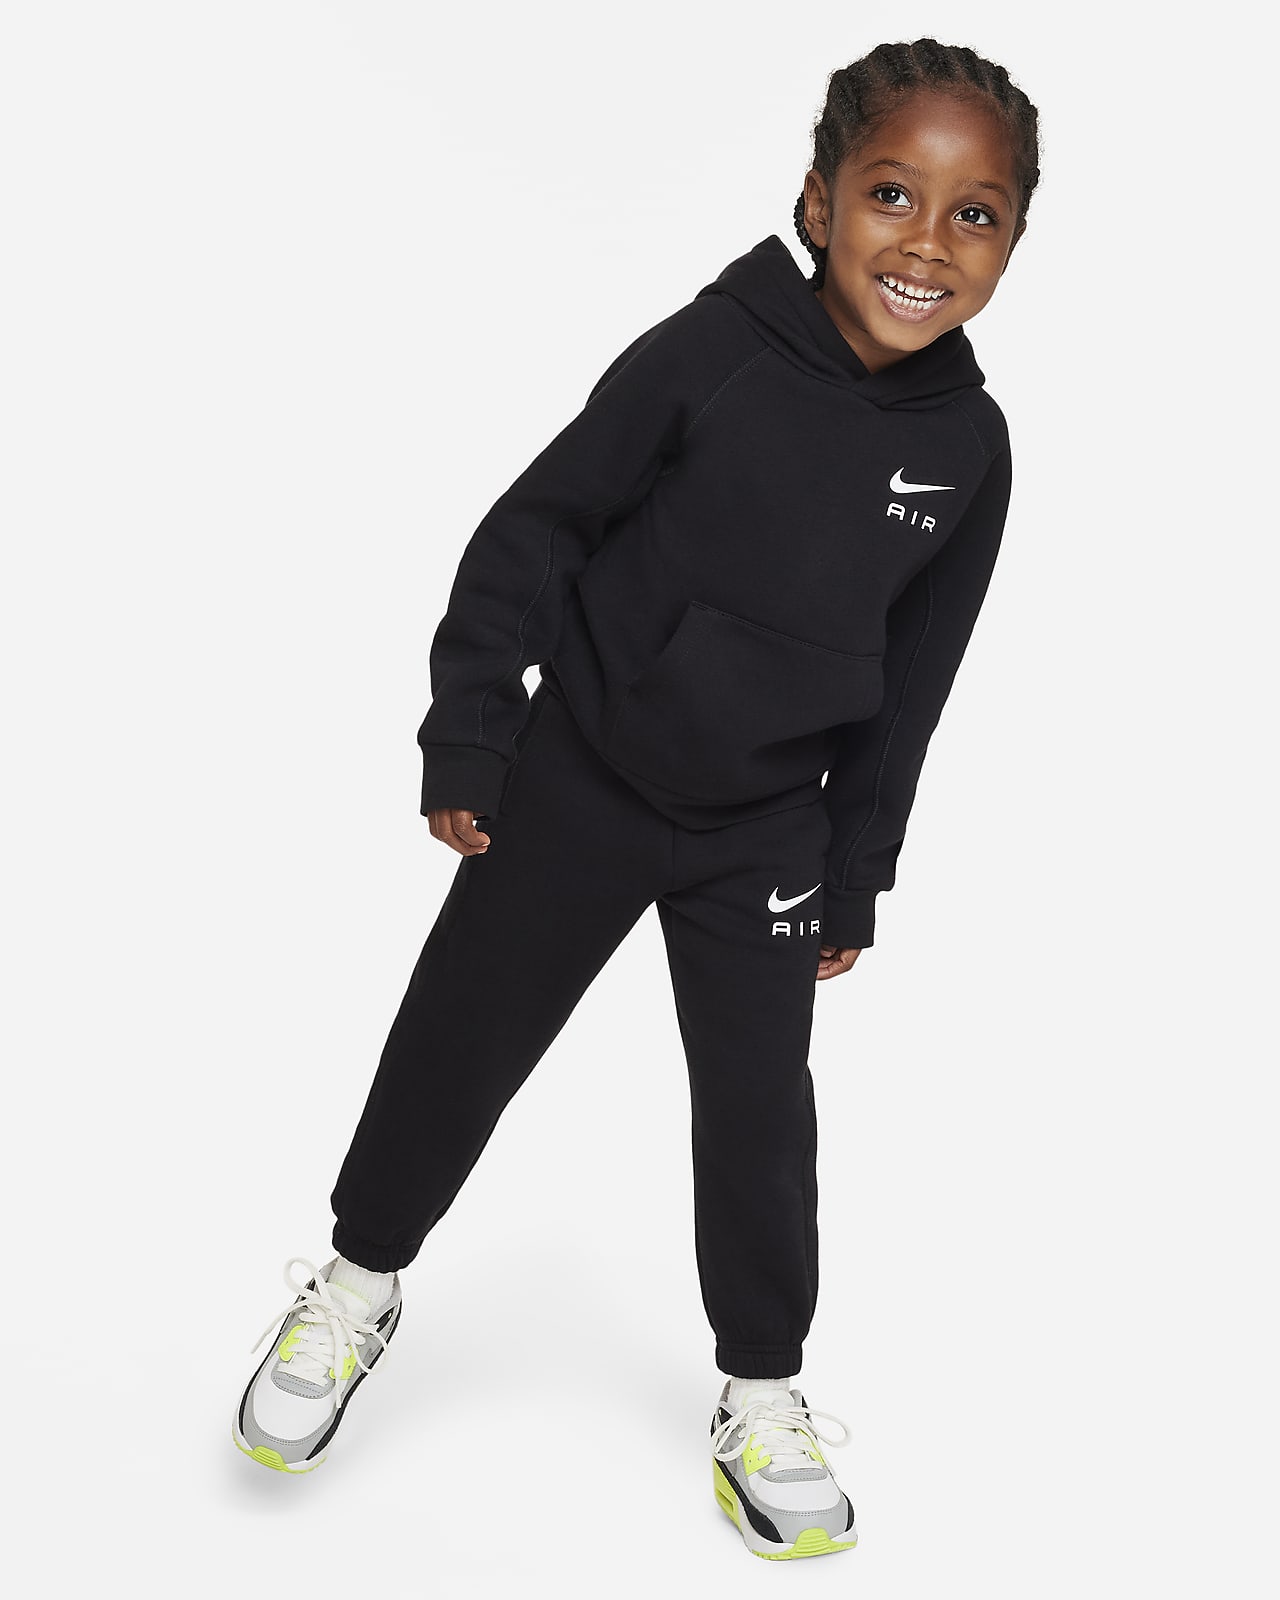 Tulpen Bot Idool Nike Toddler Air Hoodie and Pants Set. Nike.com